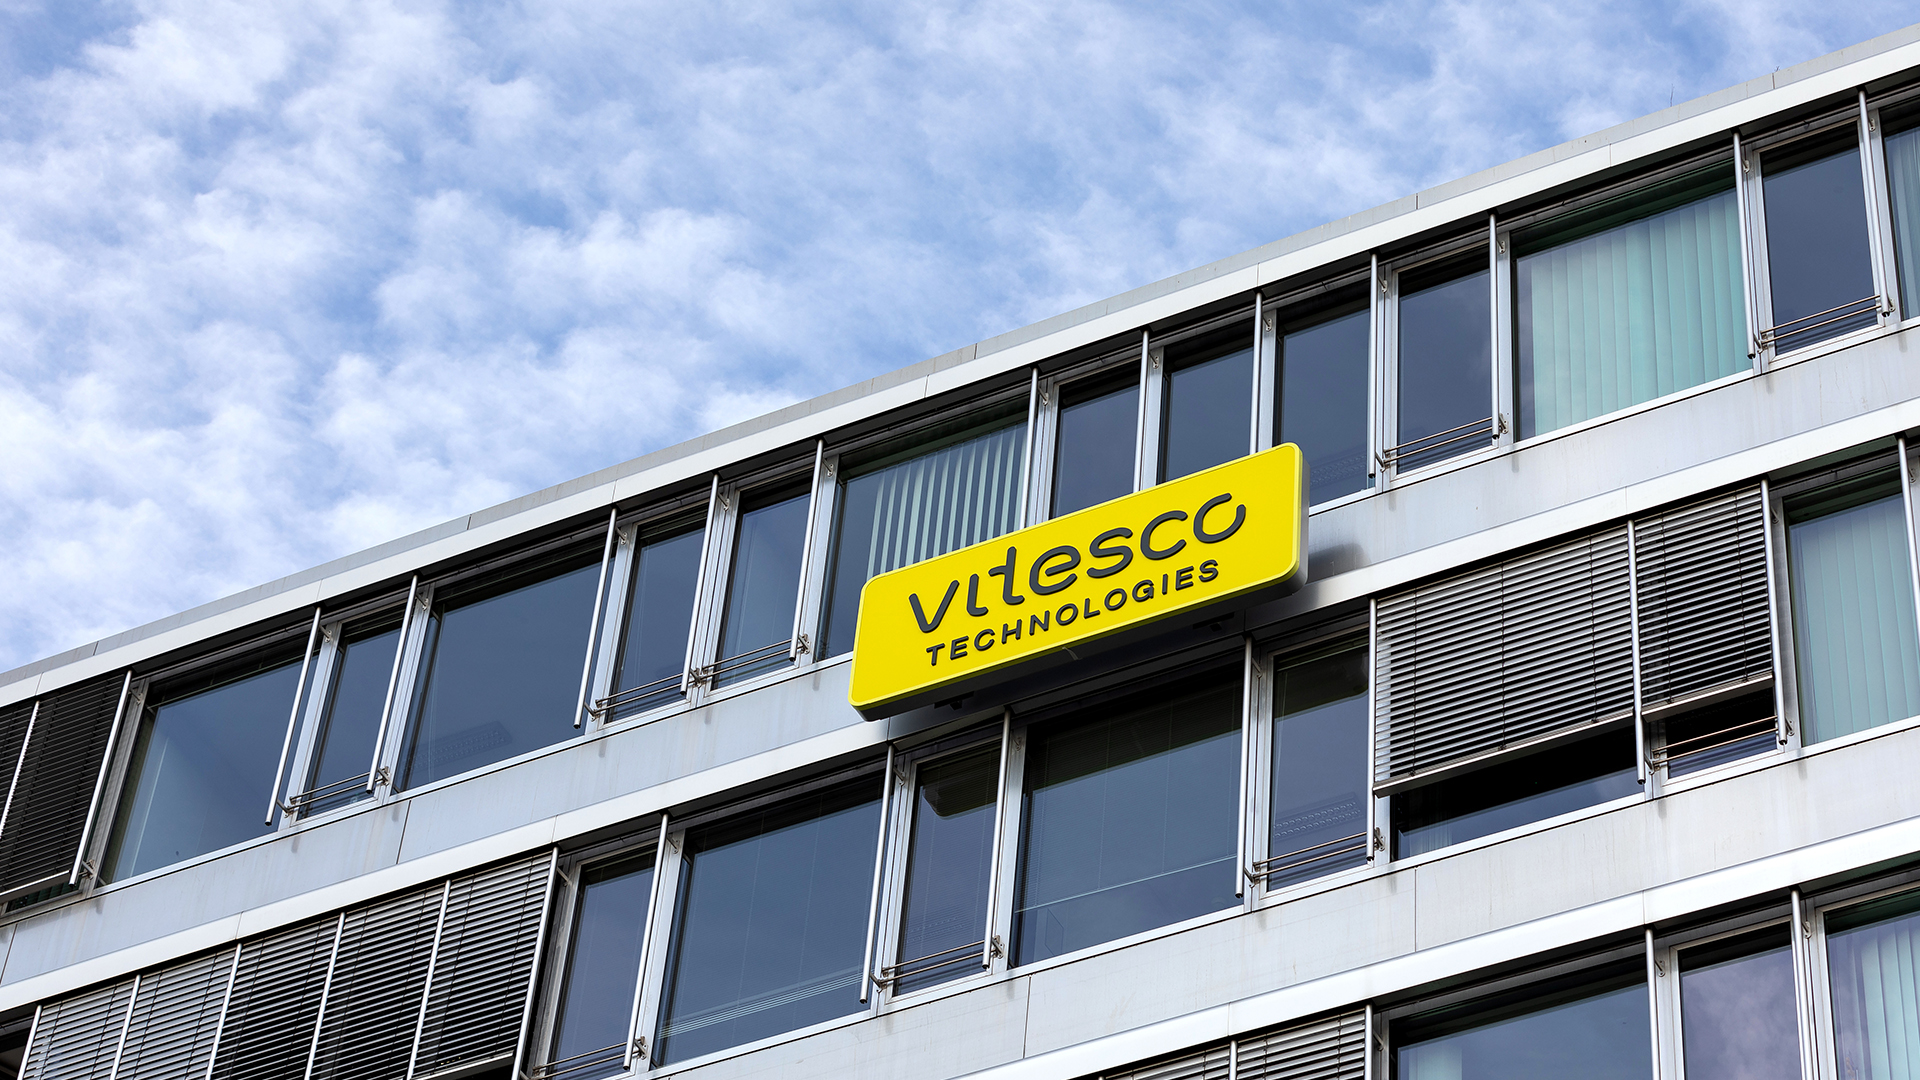 Vitesco Technologies - Company